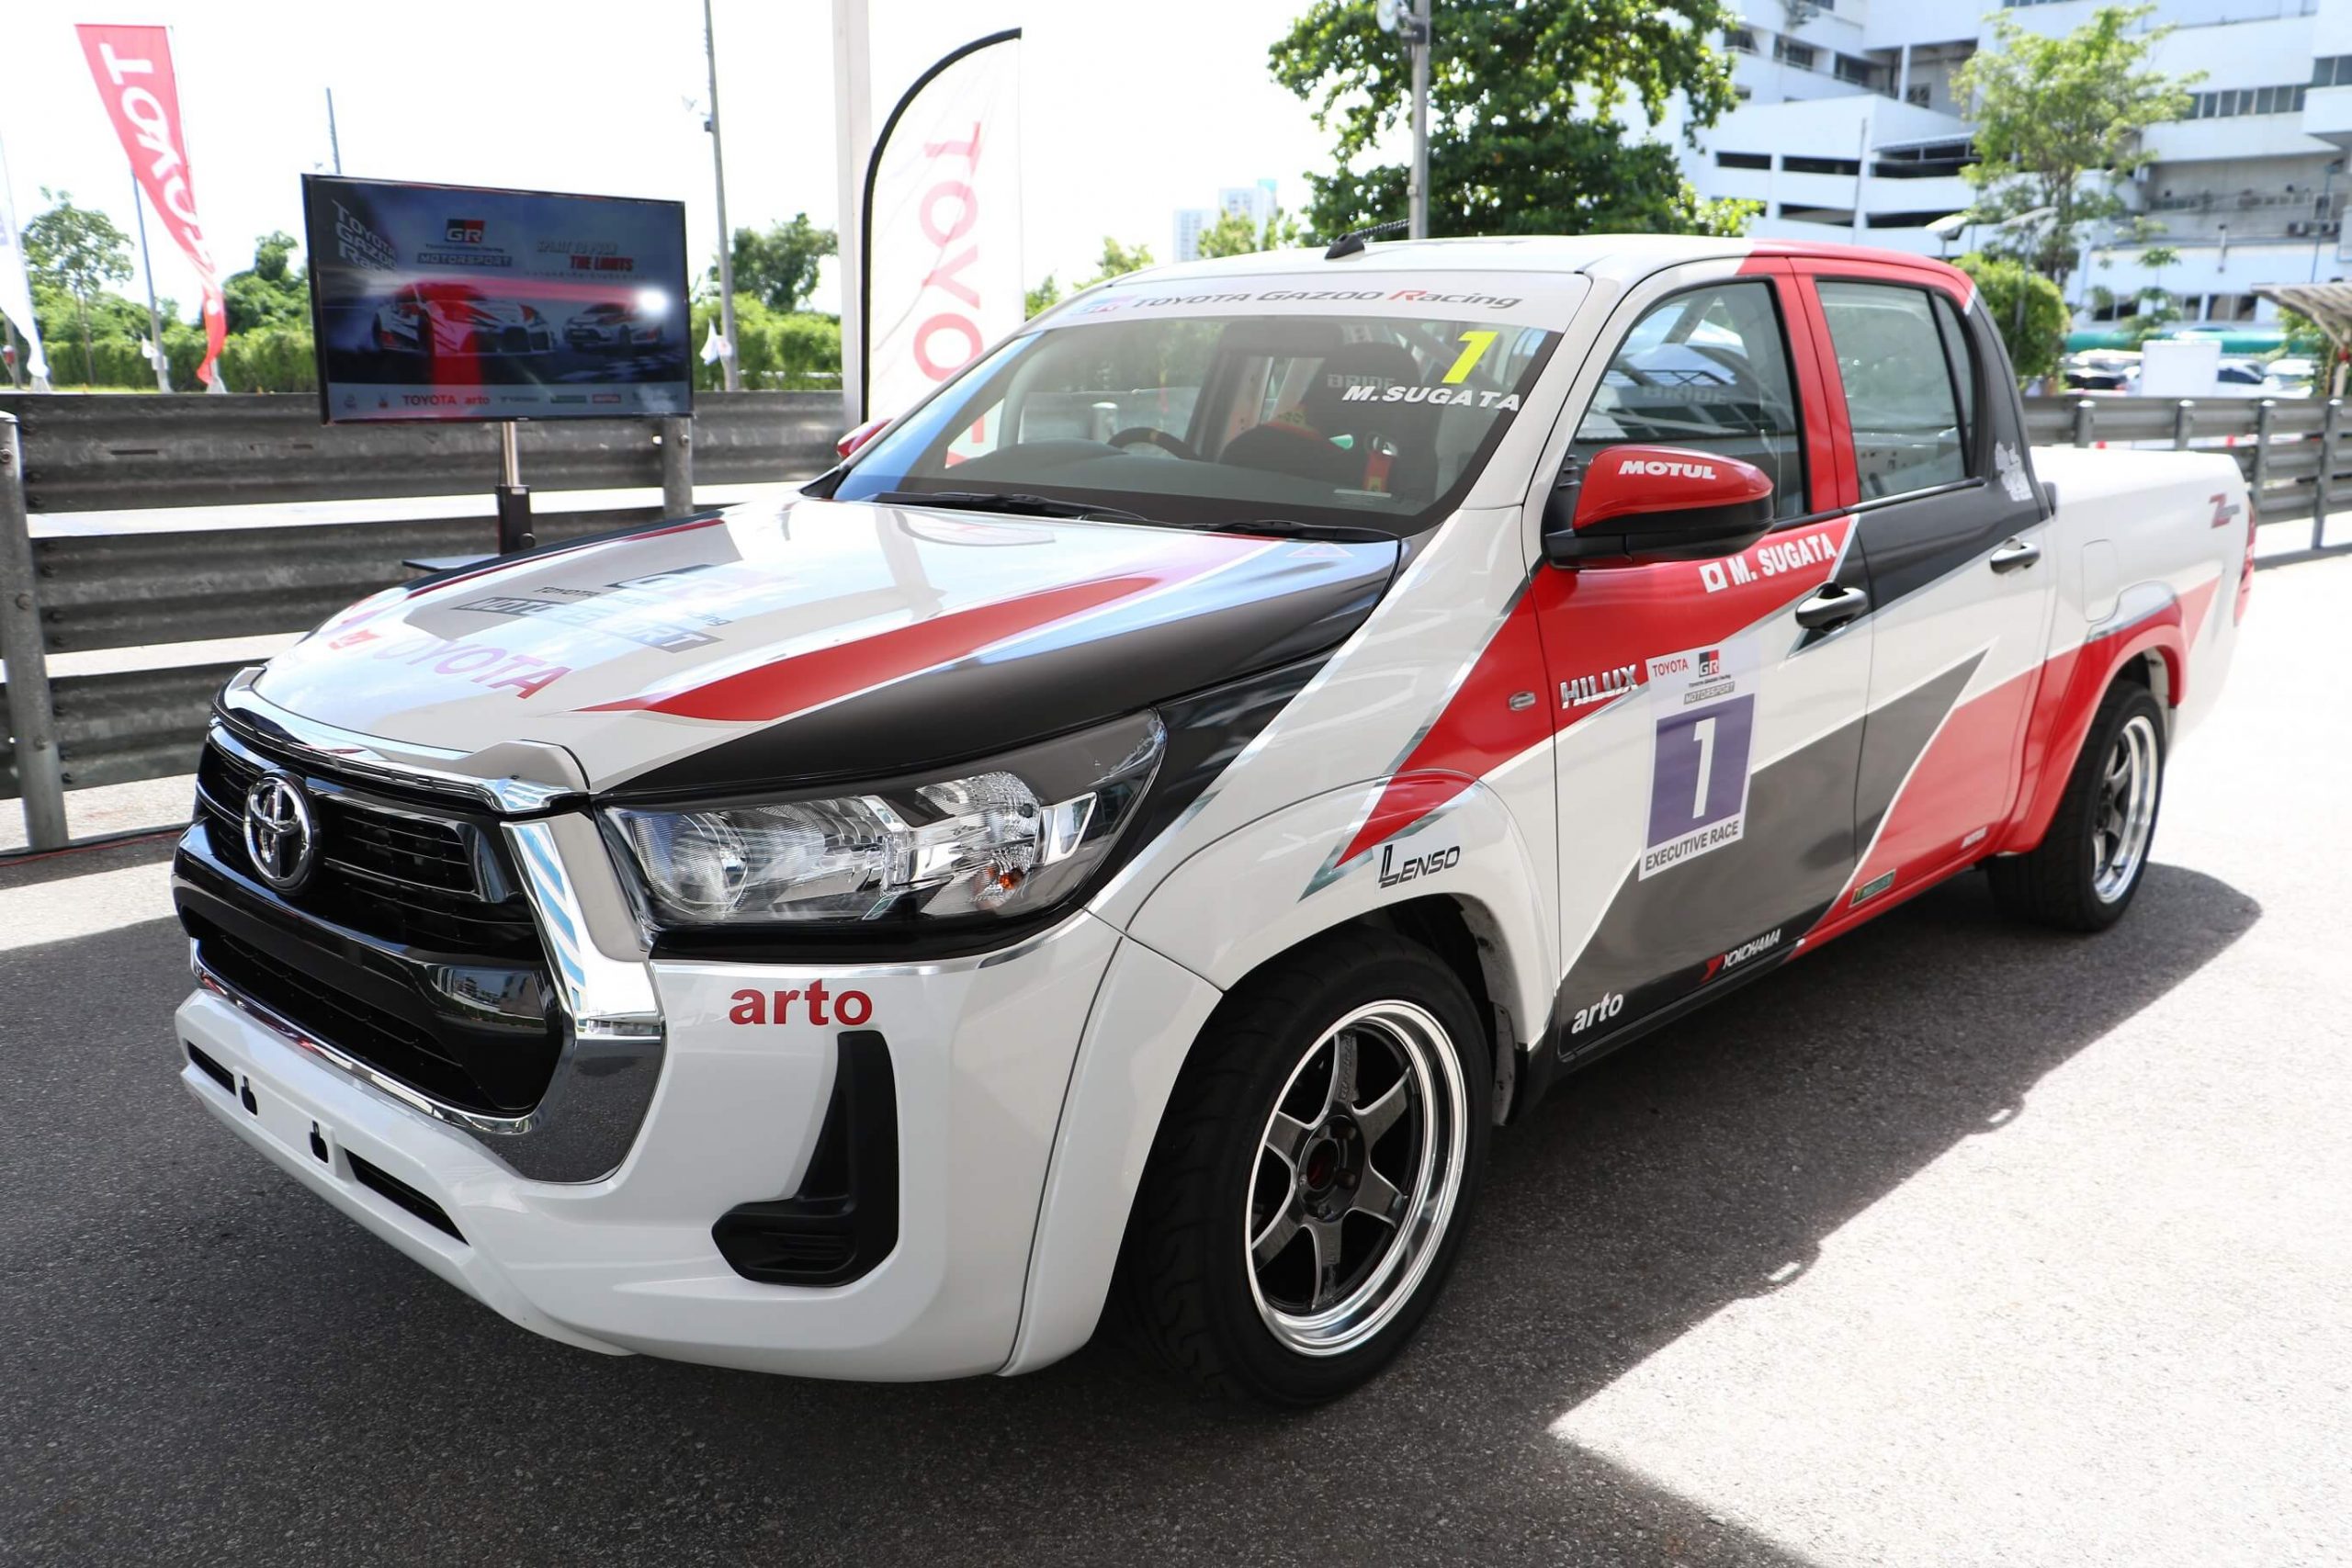 Toyota Gazoo Racing Motorsport 2020 ความกล้าที่จะข้ามขีดจำกัด...Spirit to push the limit